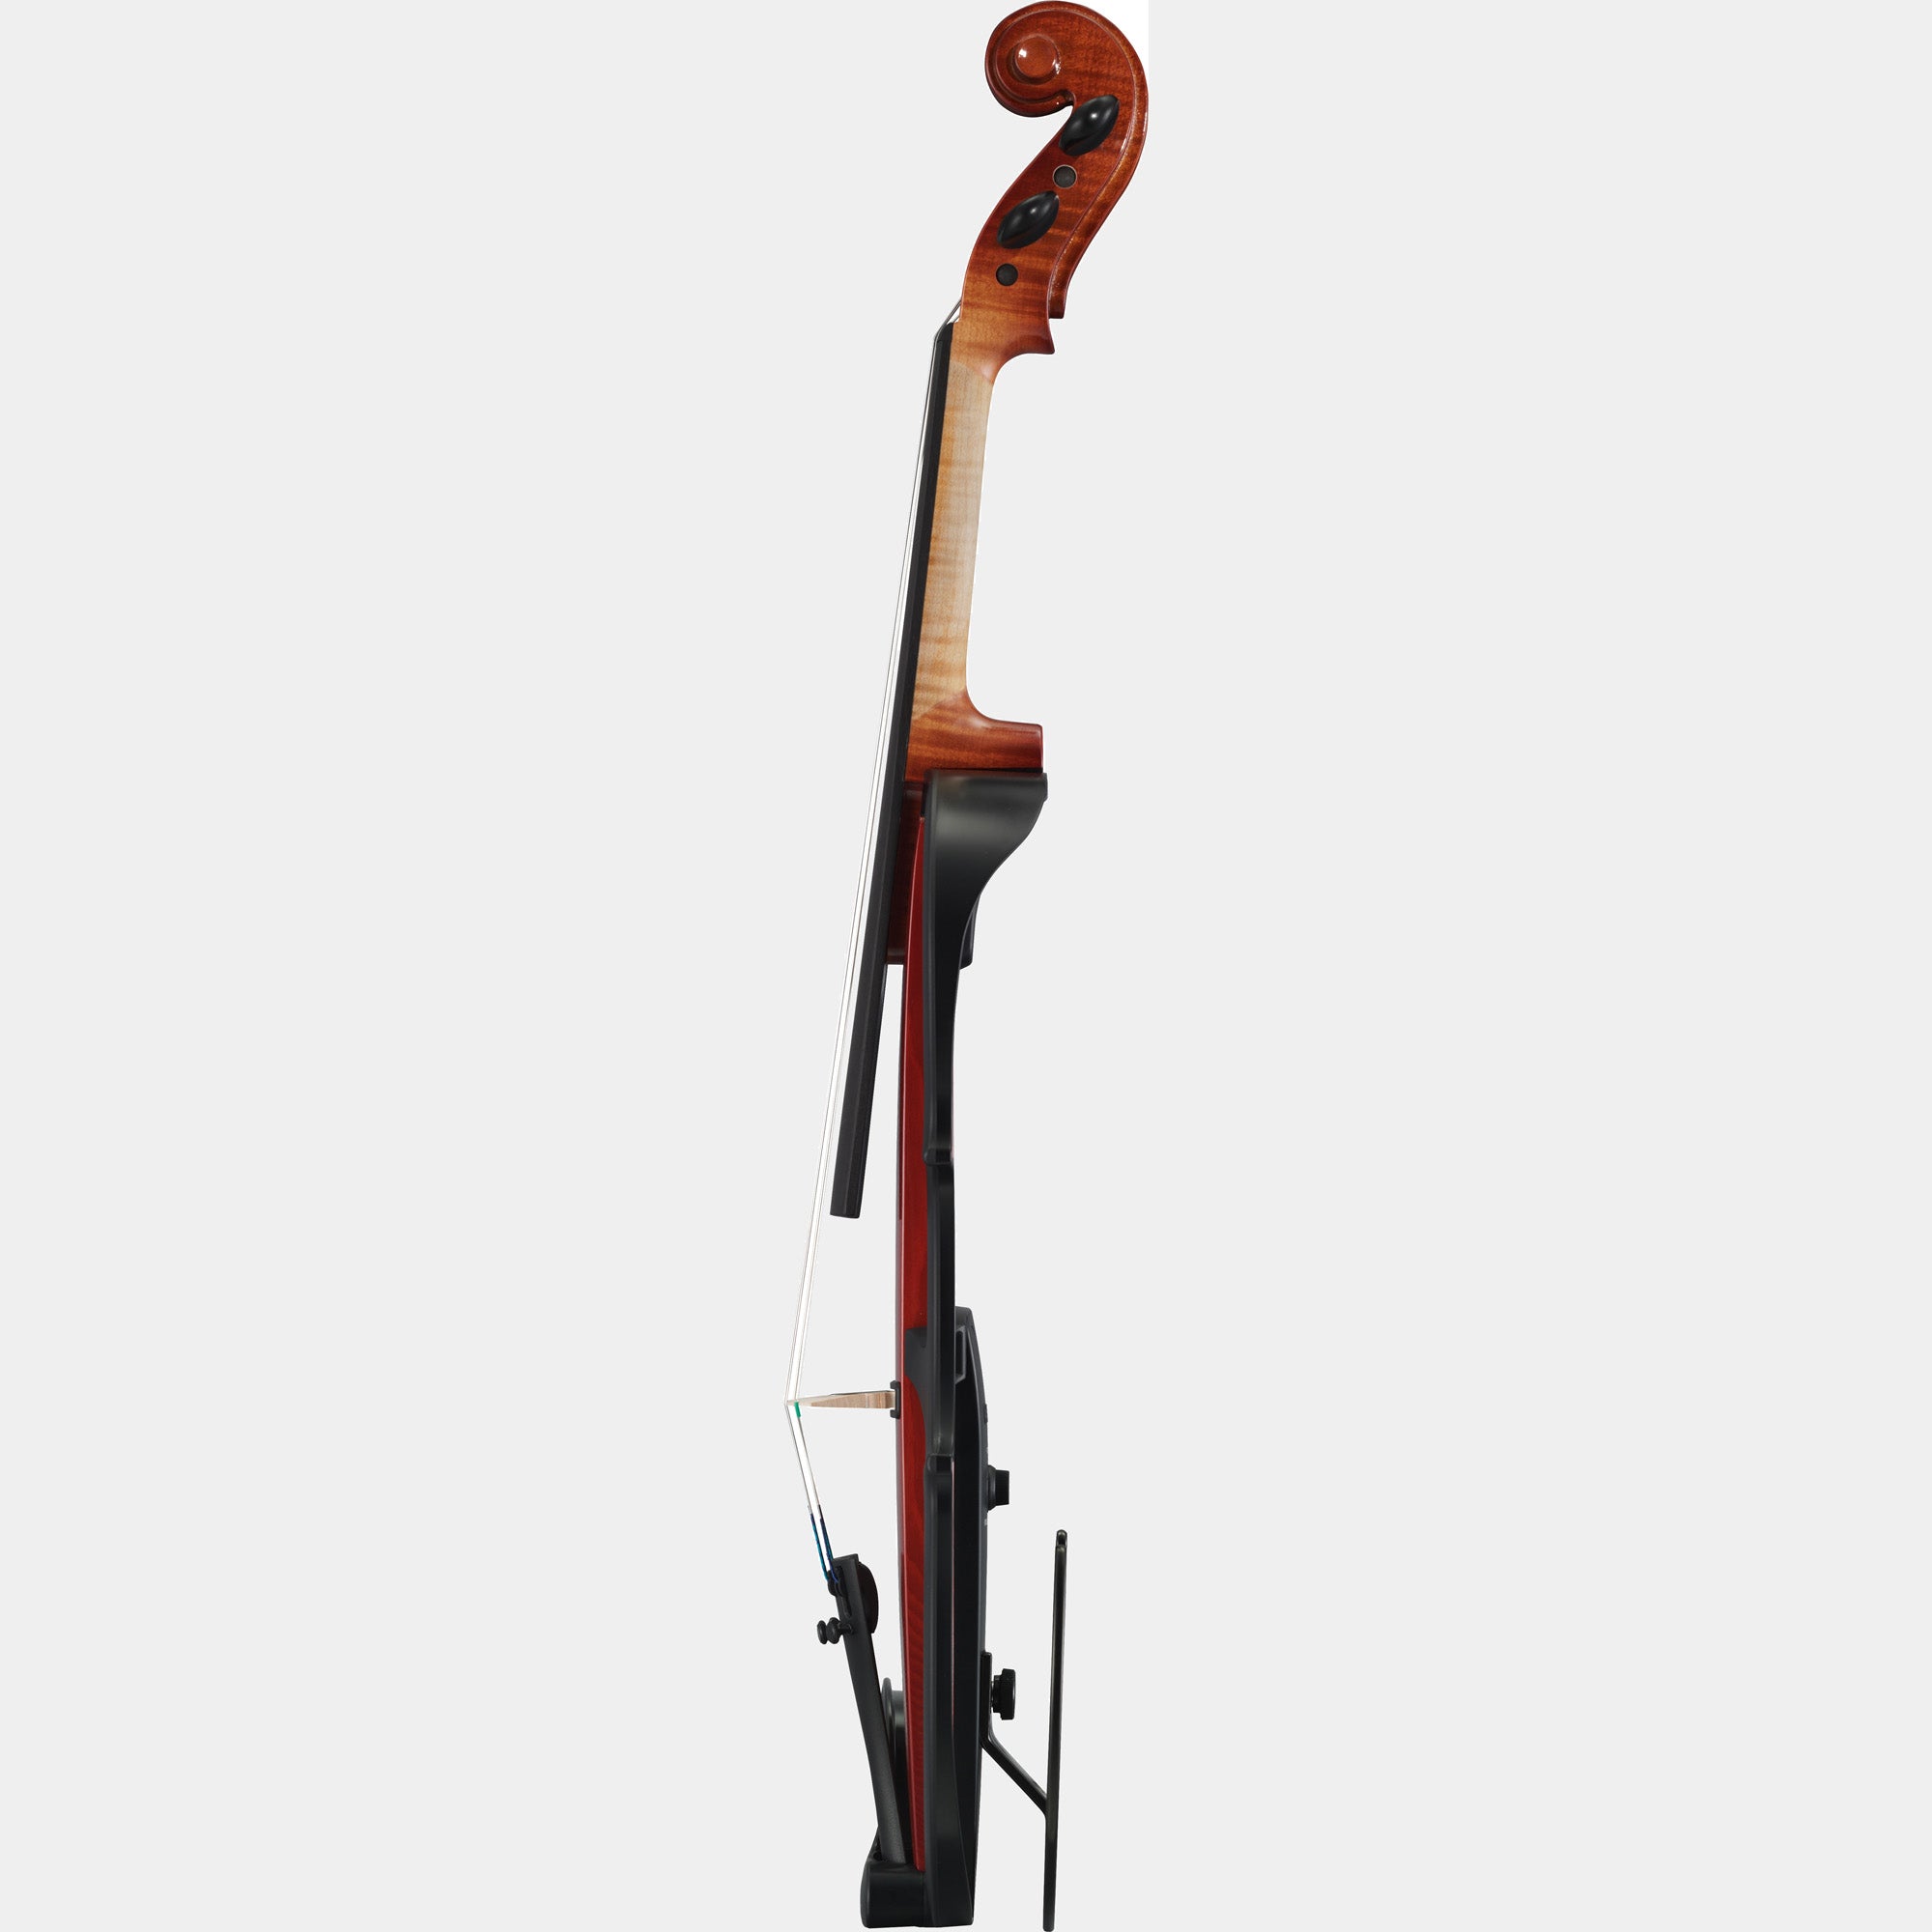 SV250 Silent Violin